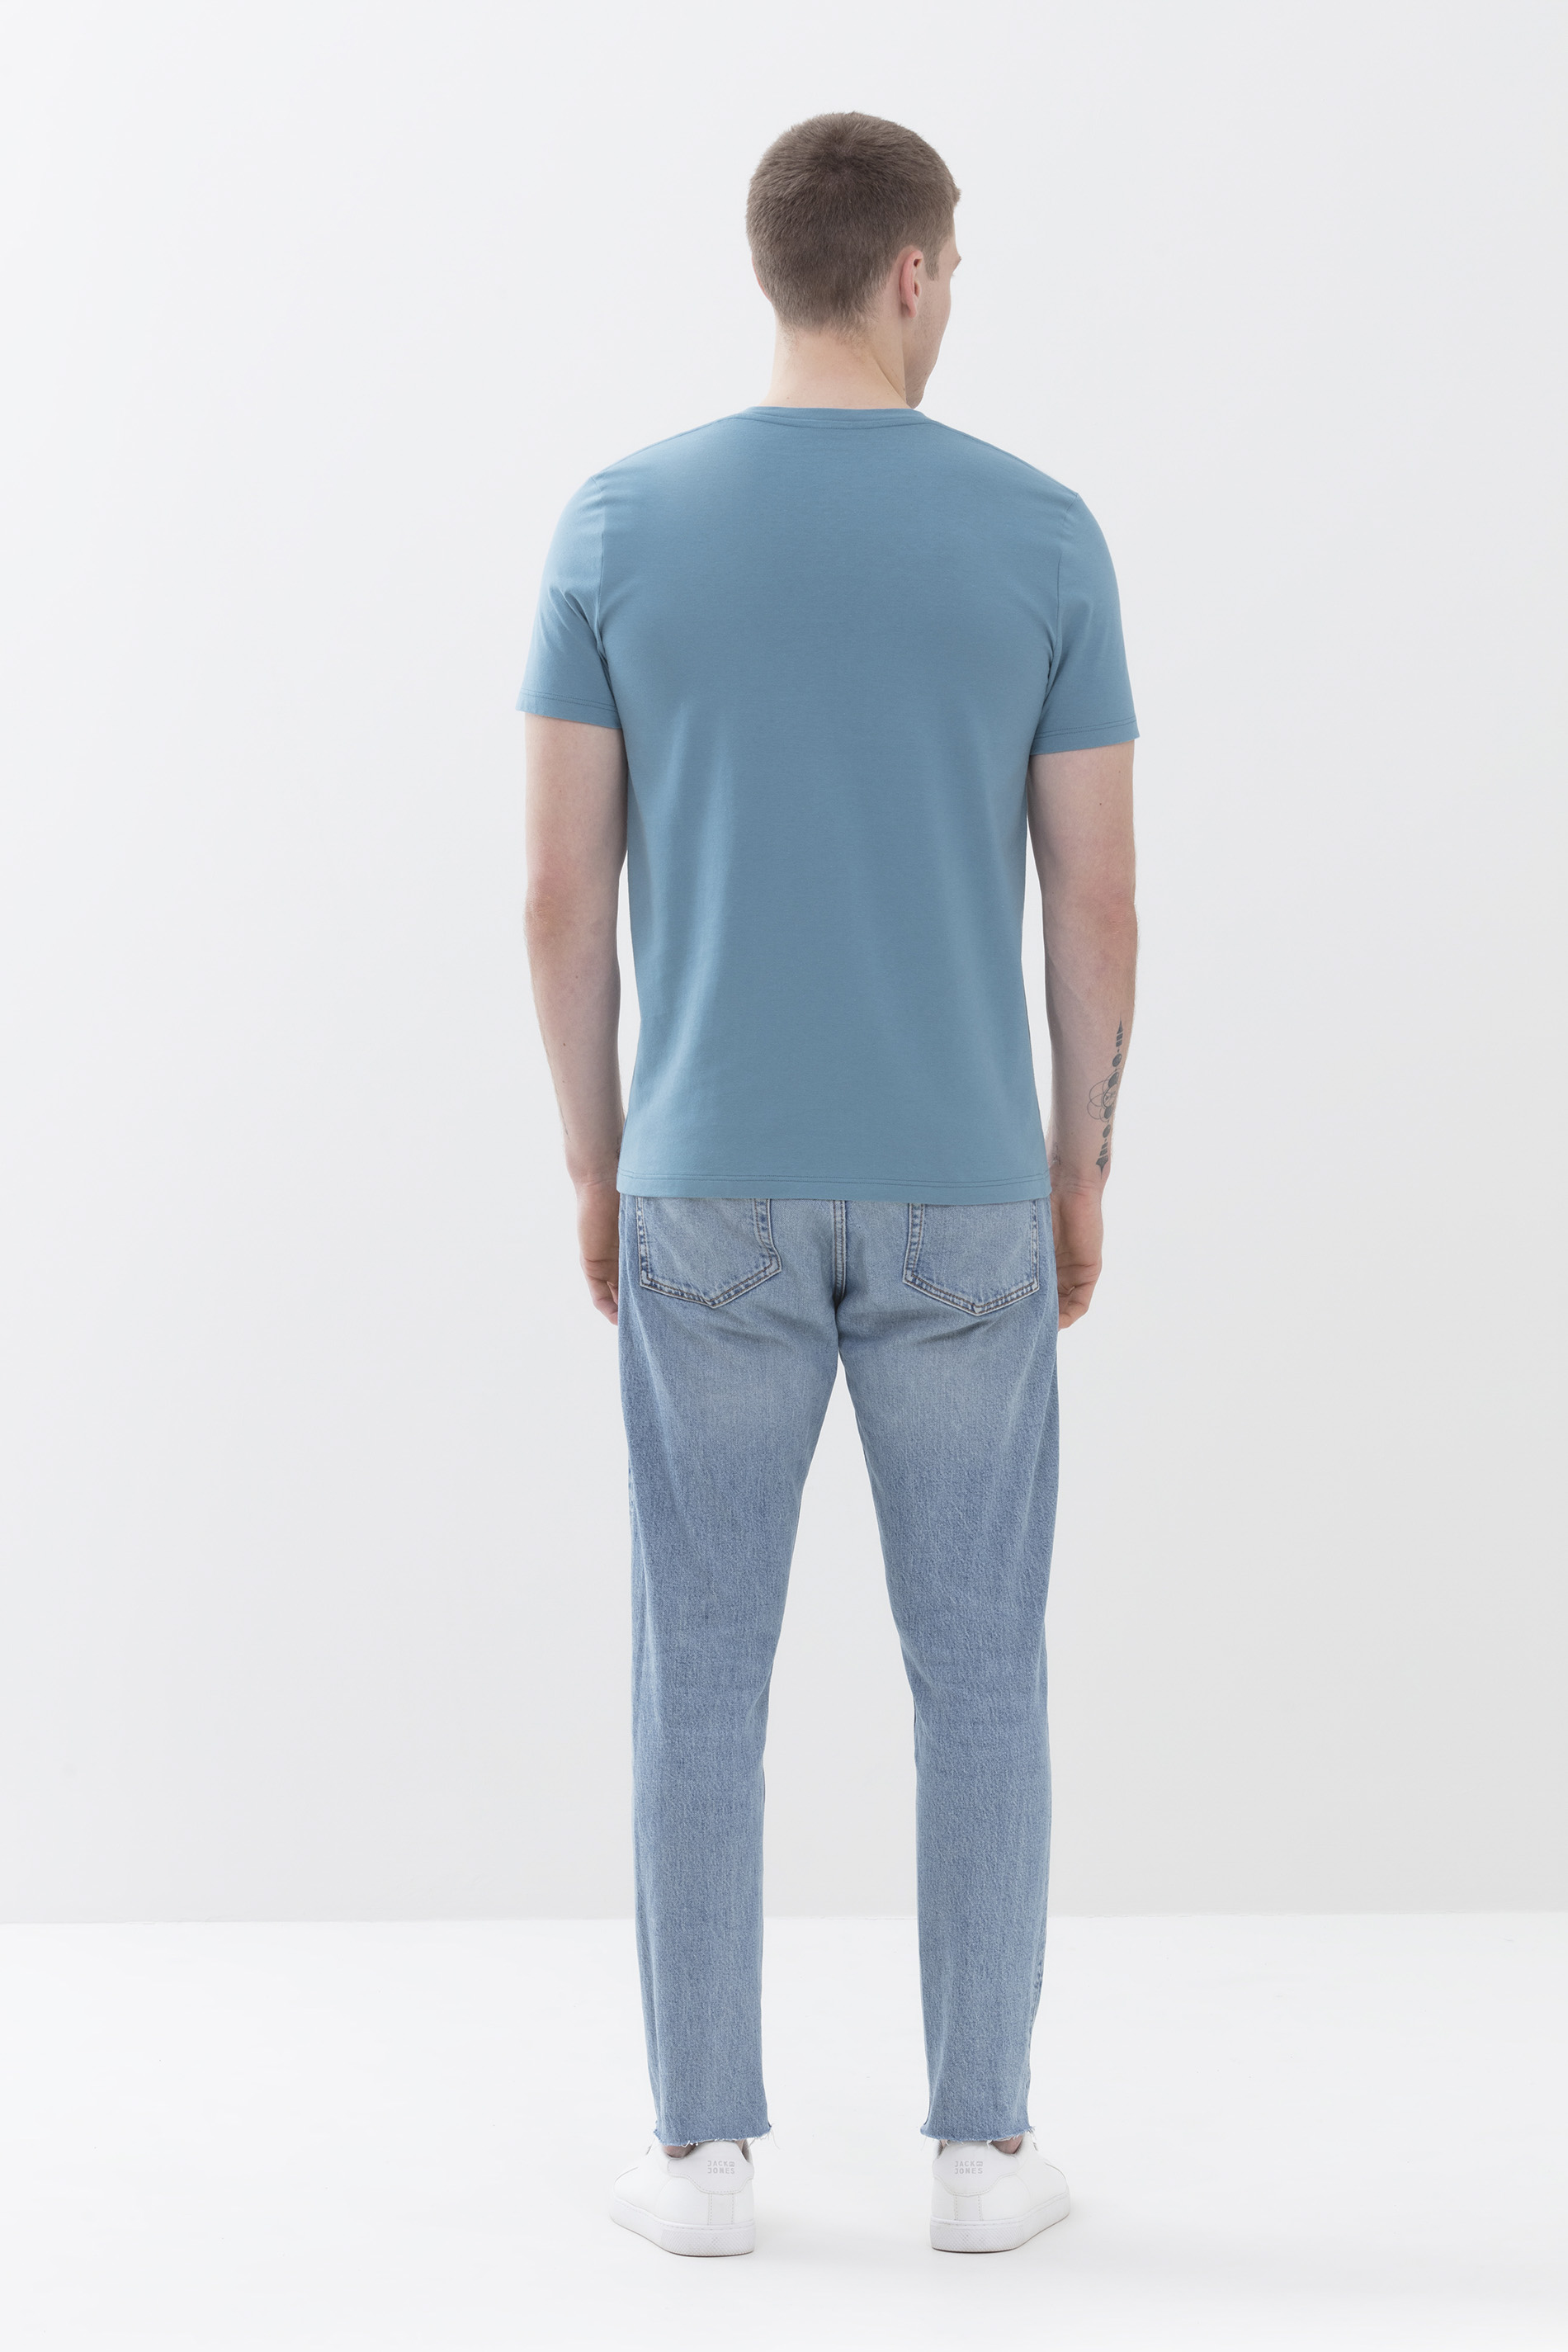 Shirt Yale Blue Serie Ringwood Rear View | mey®